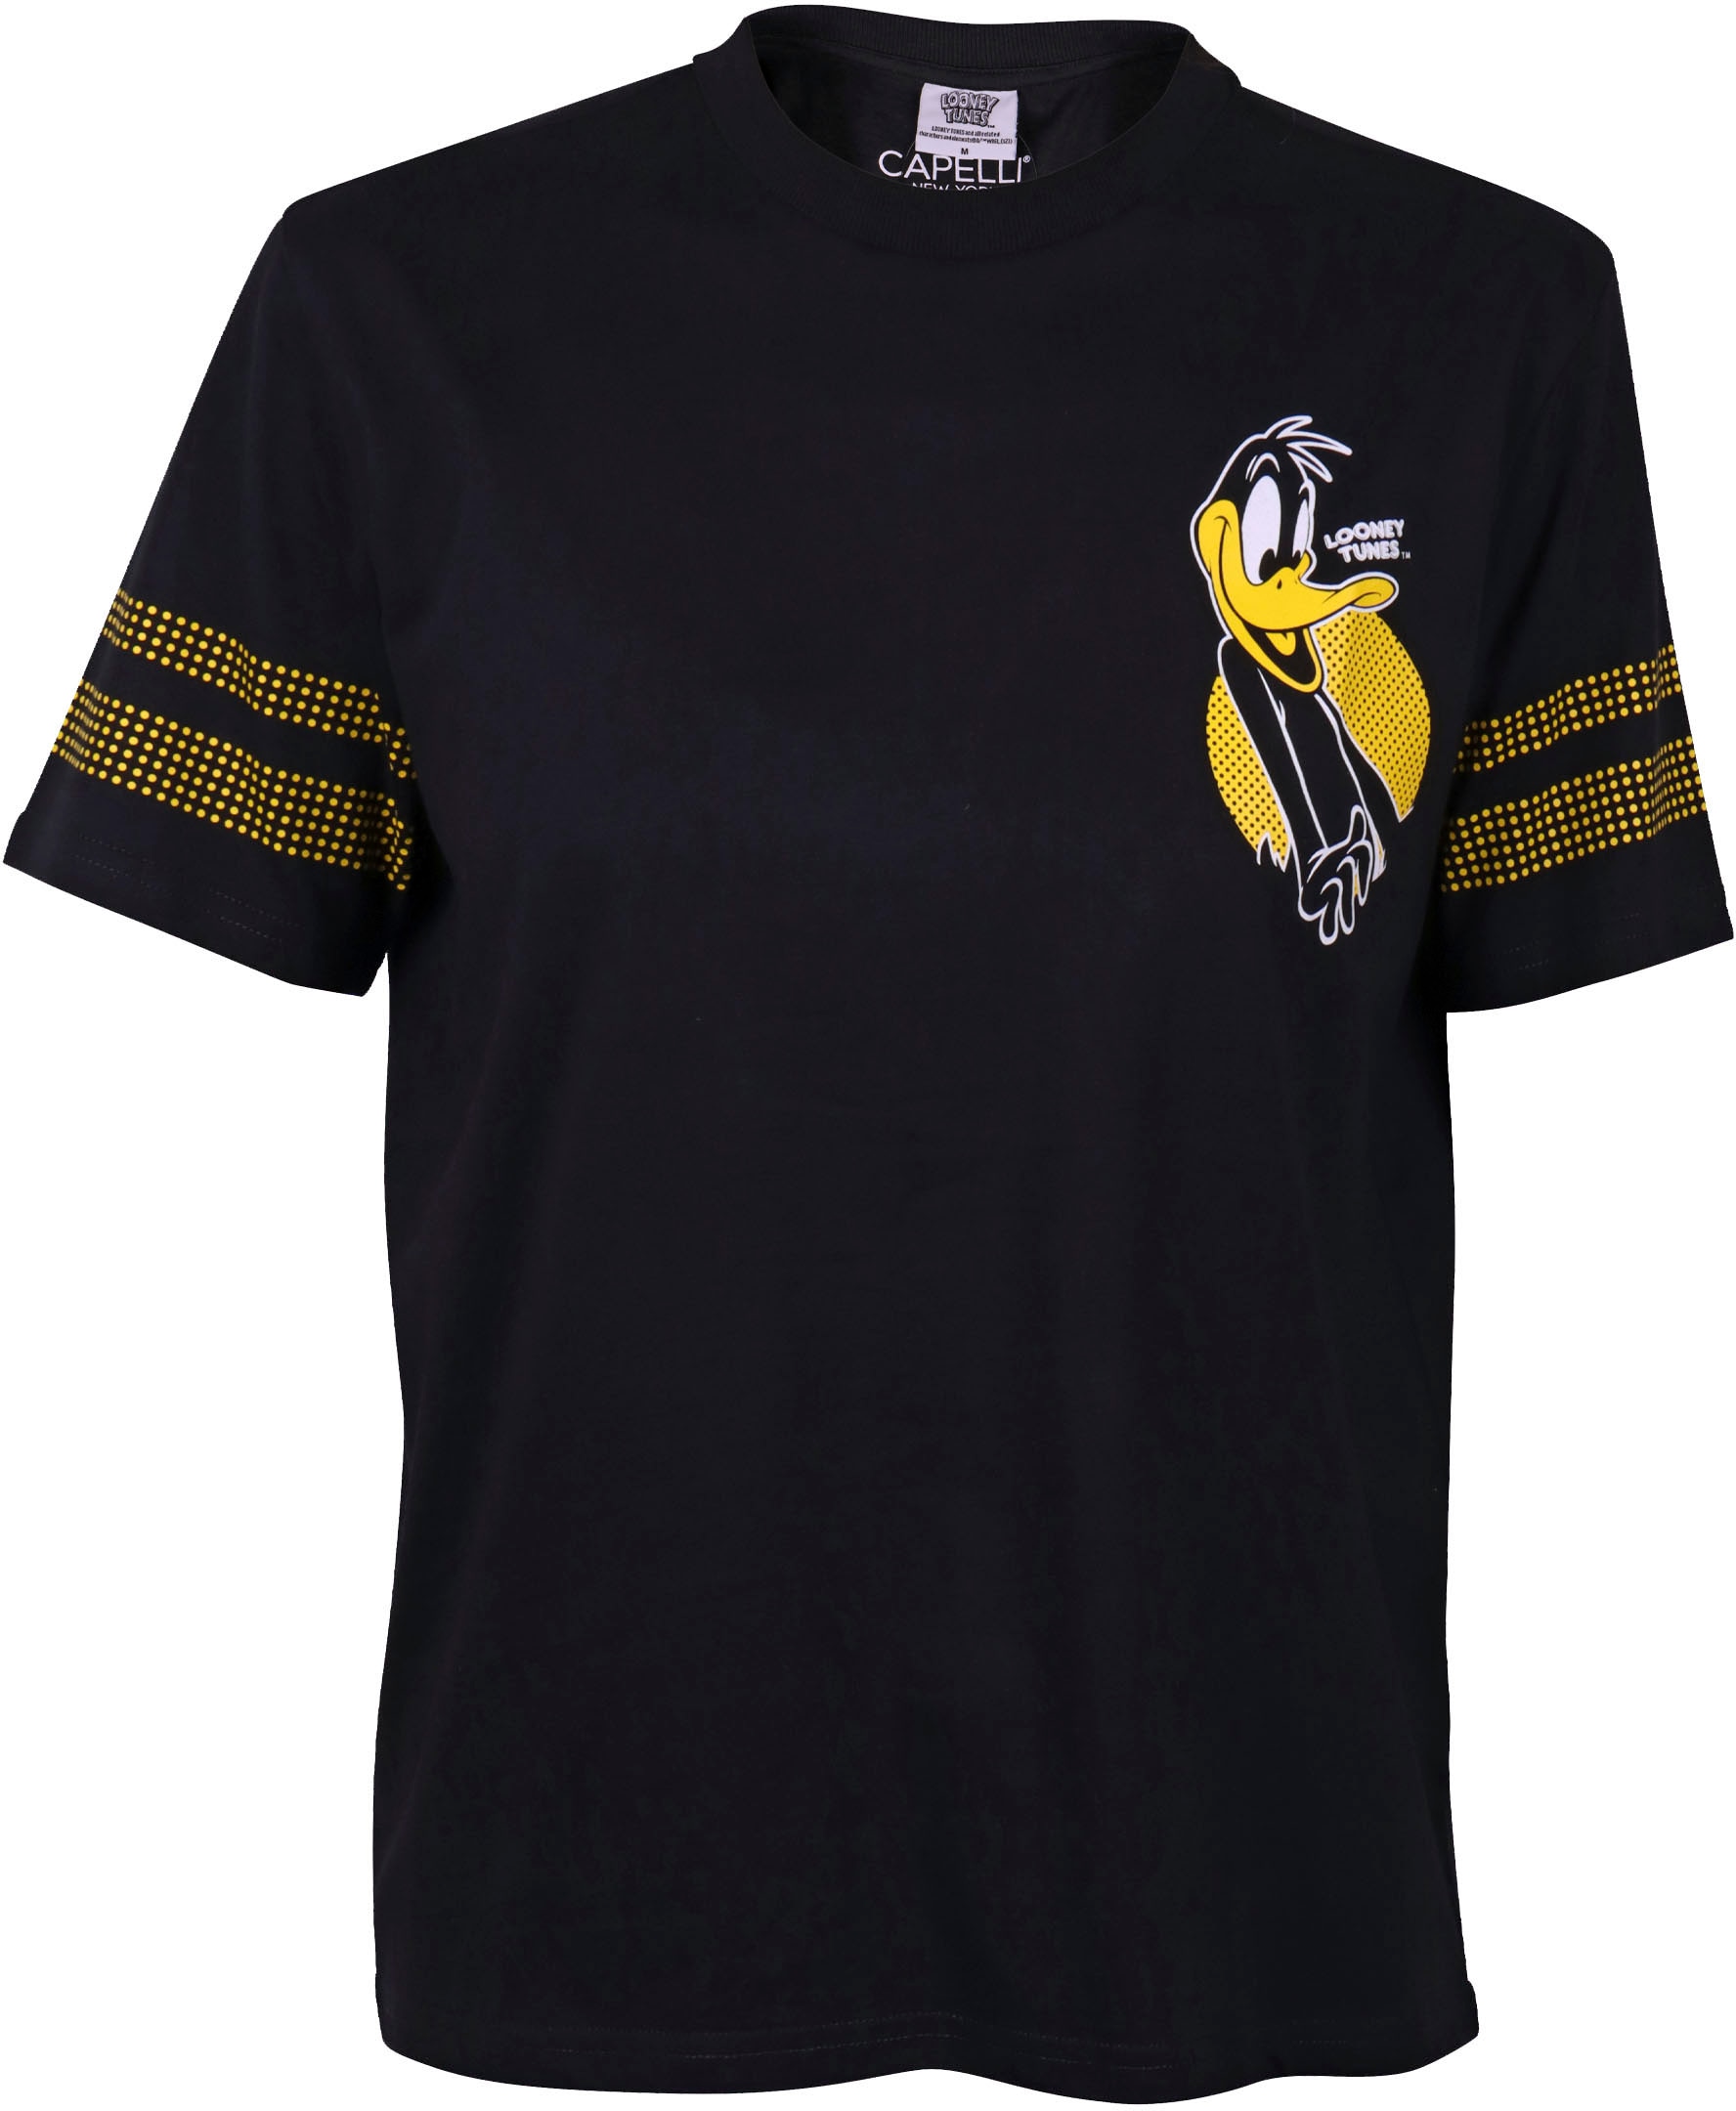 Motiv York Duck New Duffy T-Shirt, Capelli Acheter